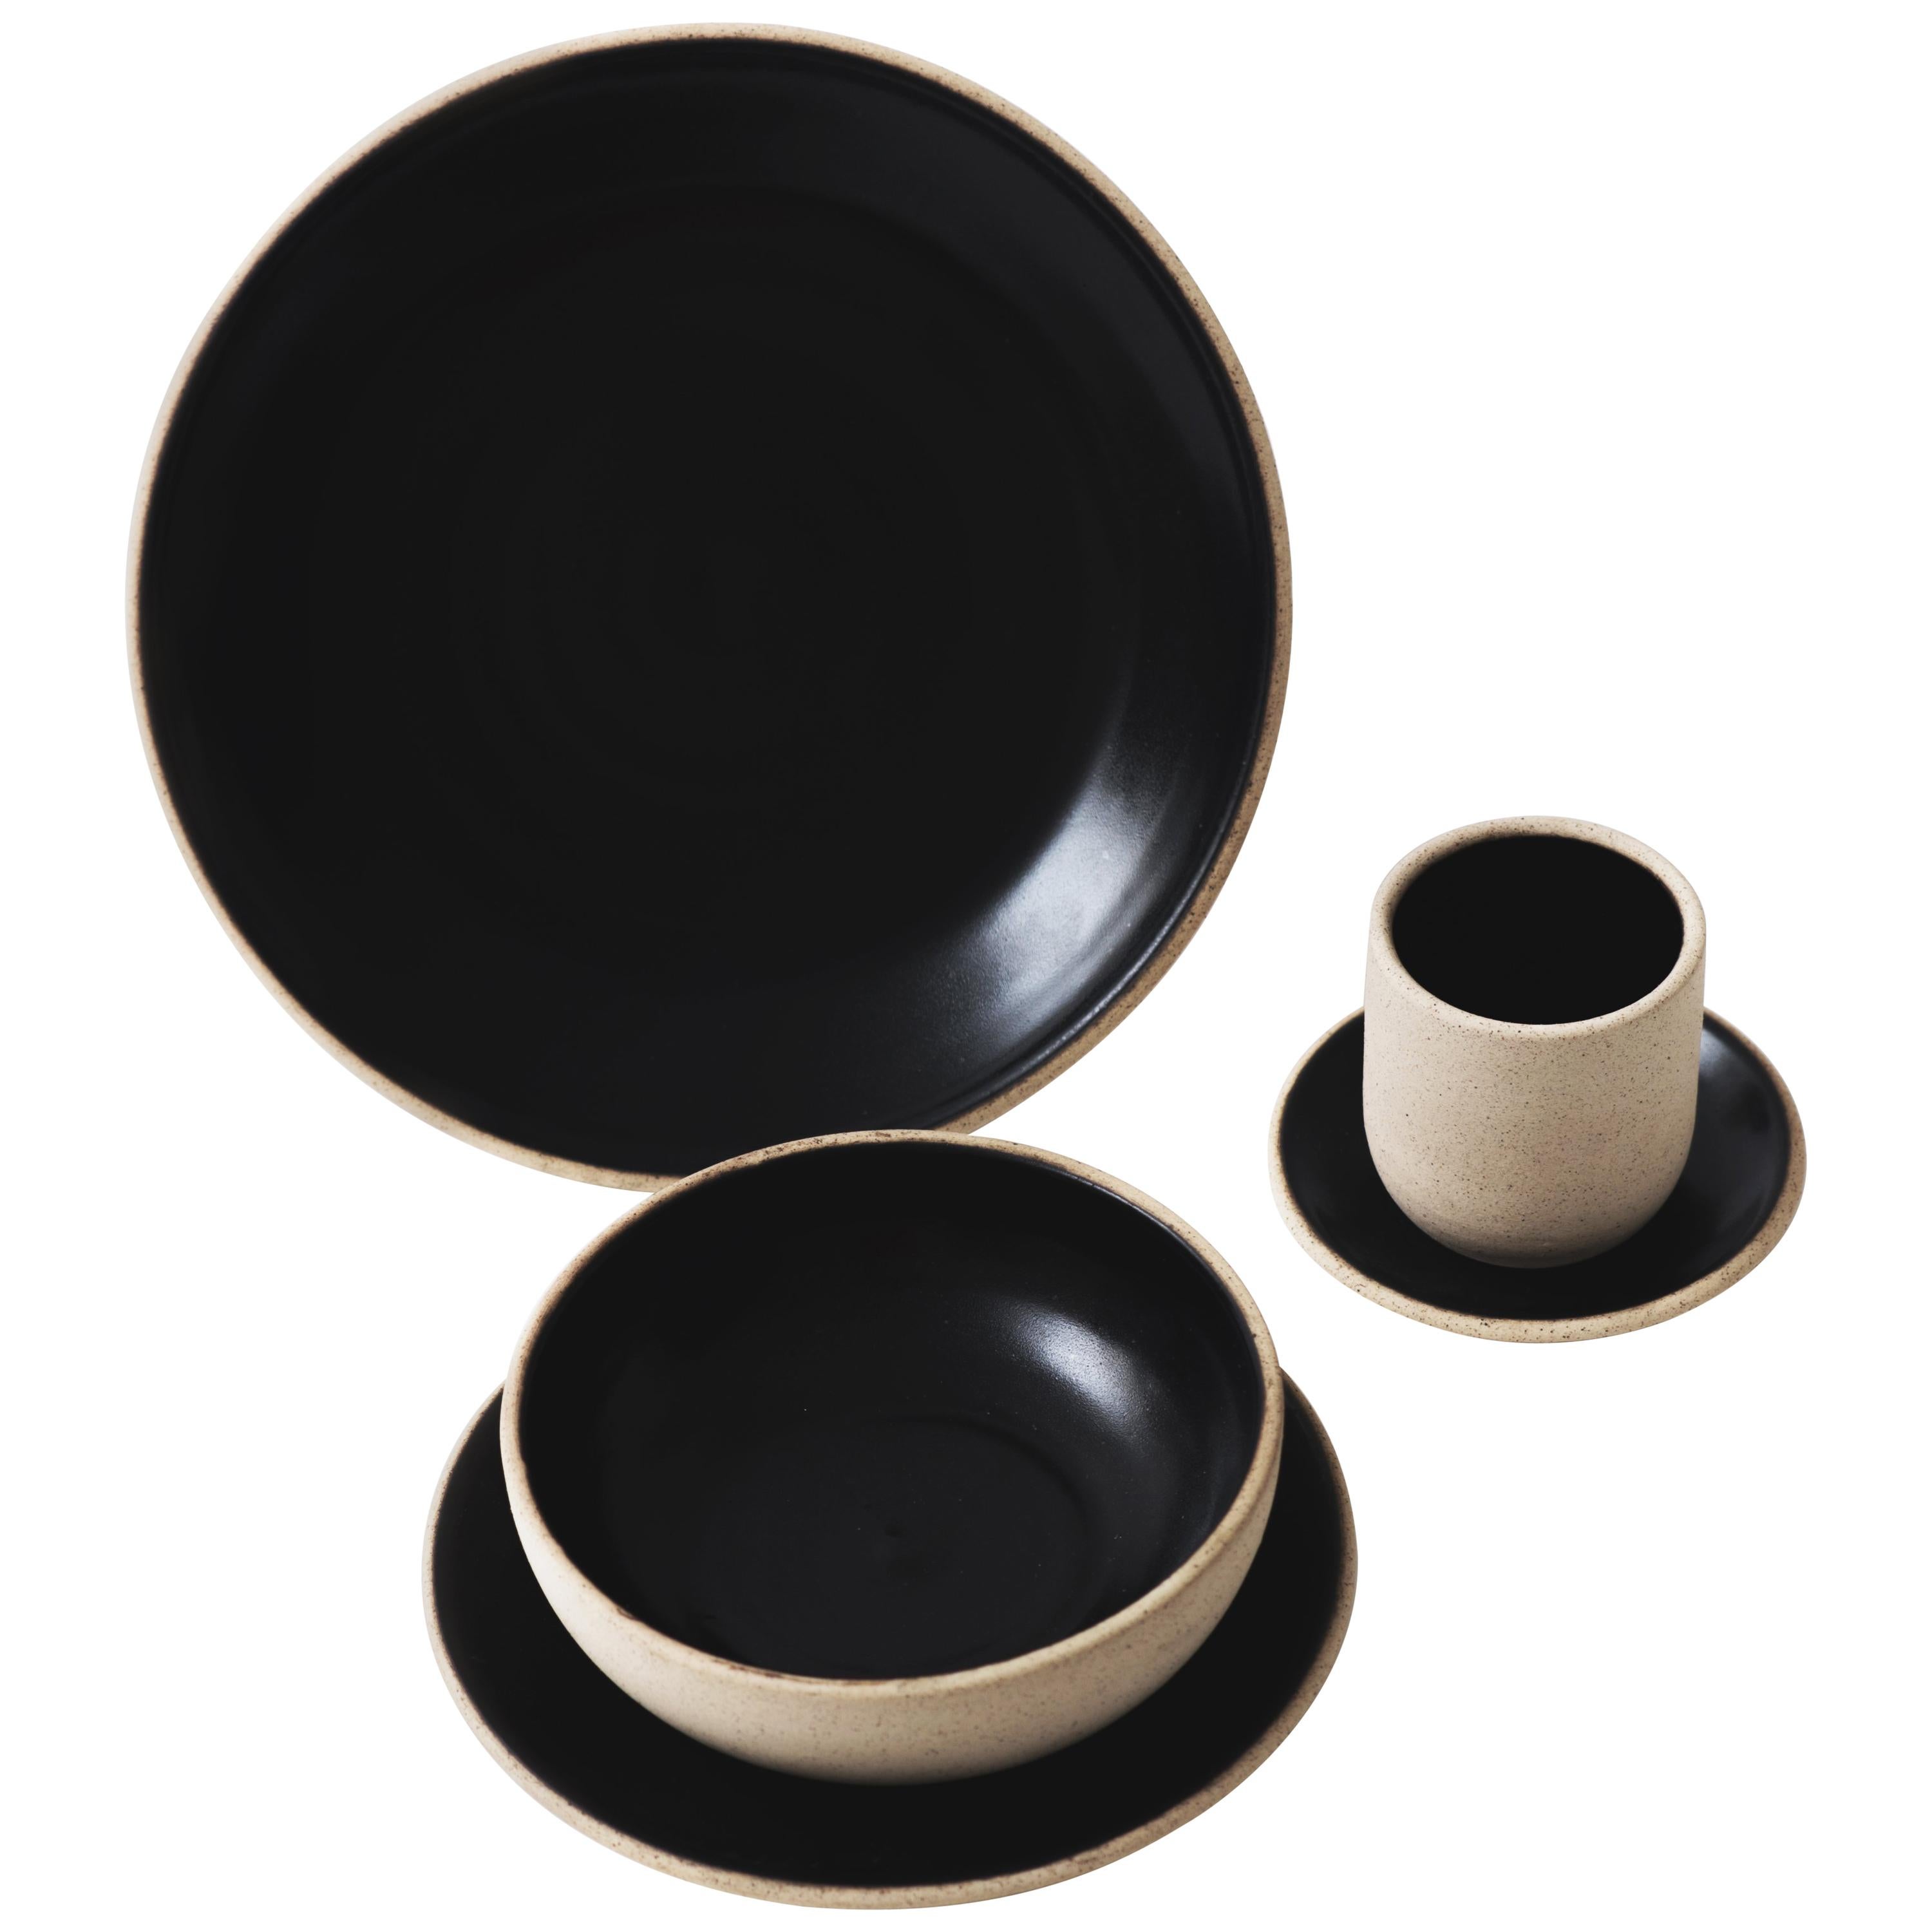 Handmade Ceramic Stoneware Dinner Plate in Black Obsidian and Natural, in Stock